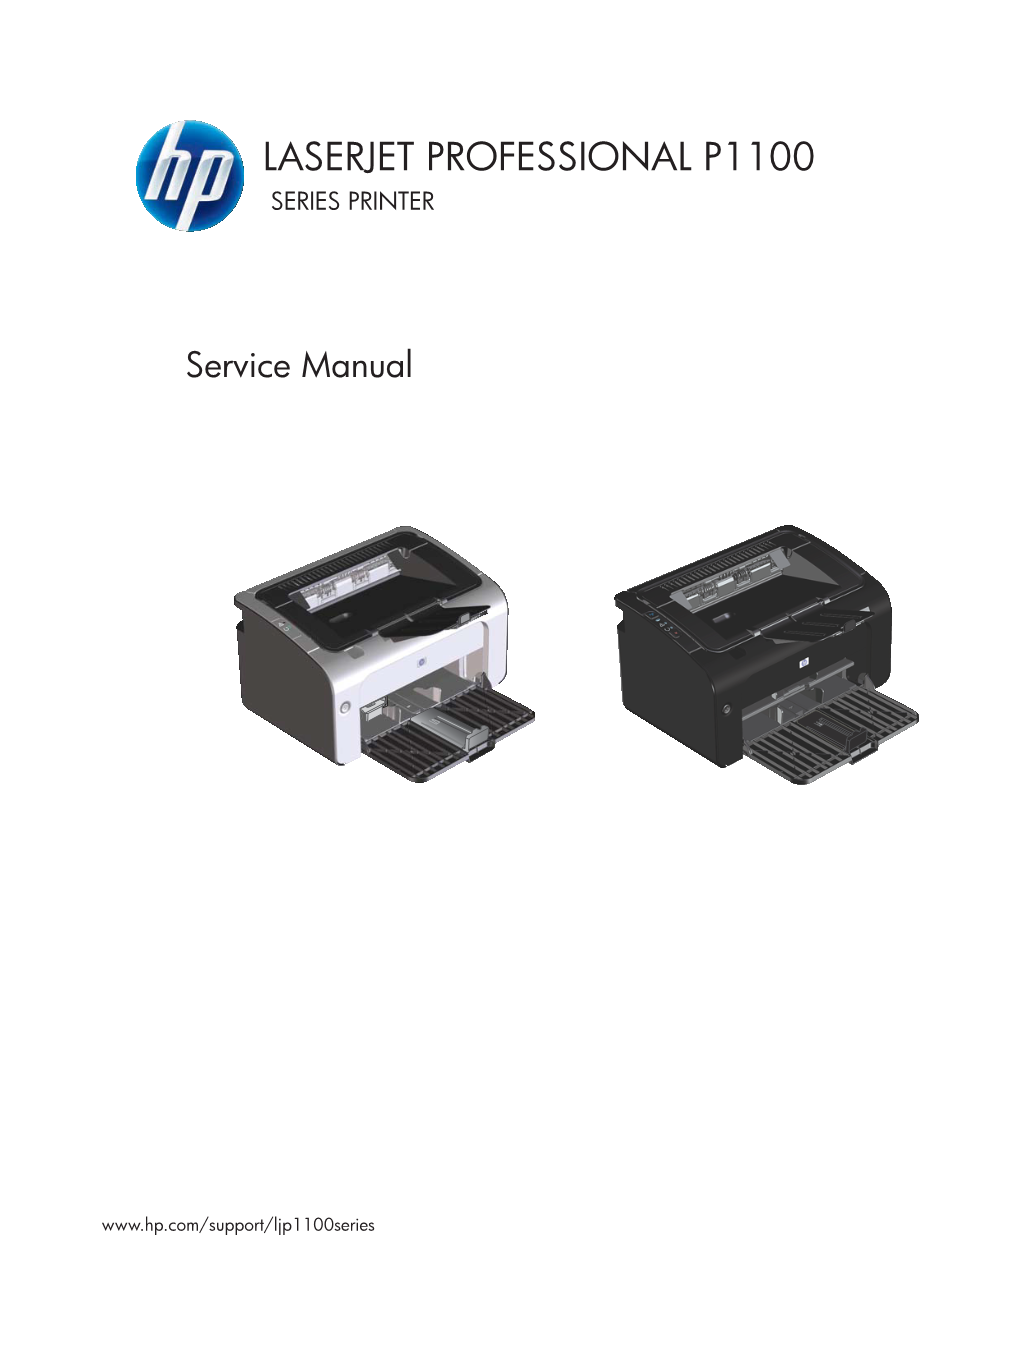 HP Laserjet Professional P1100 Series Printer